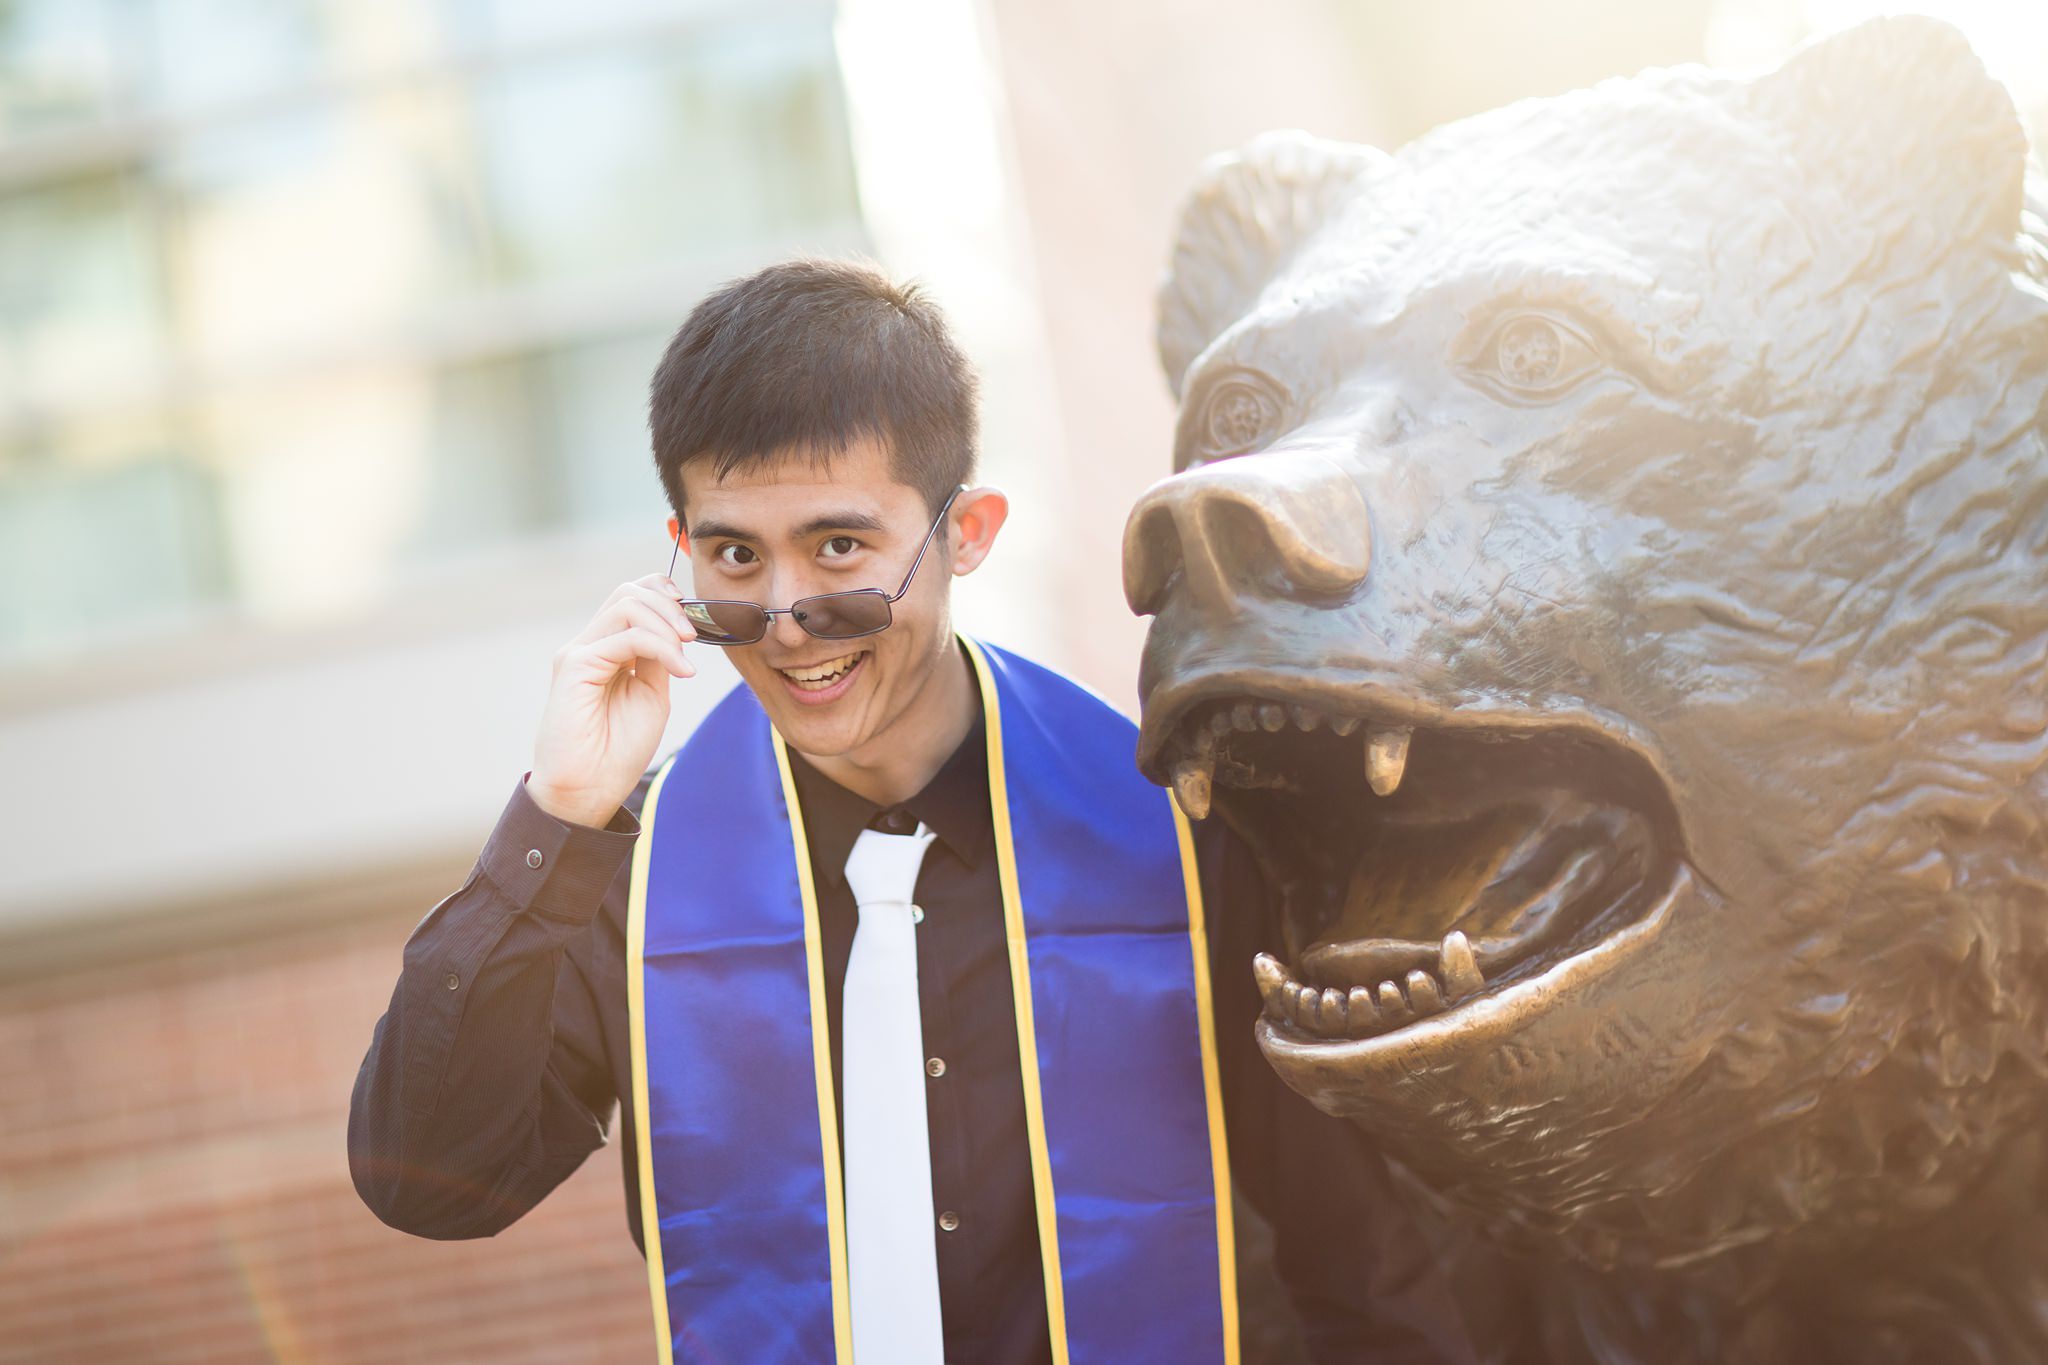 los-angeles-ucla-senior-graduation-portraits-at-bruin-bear-looking-over-glasses